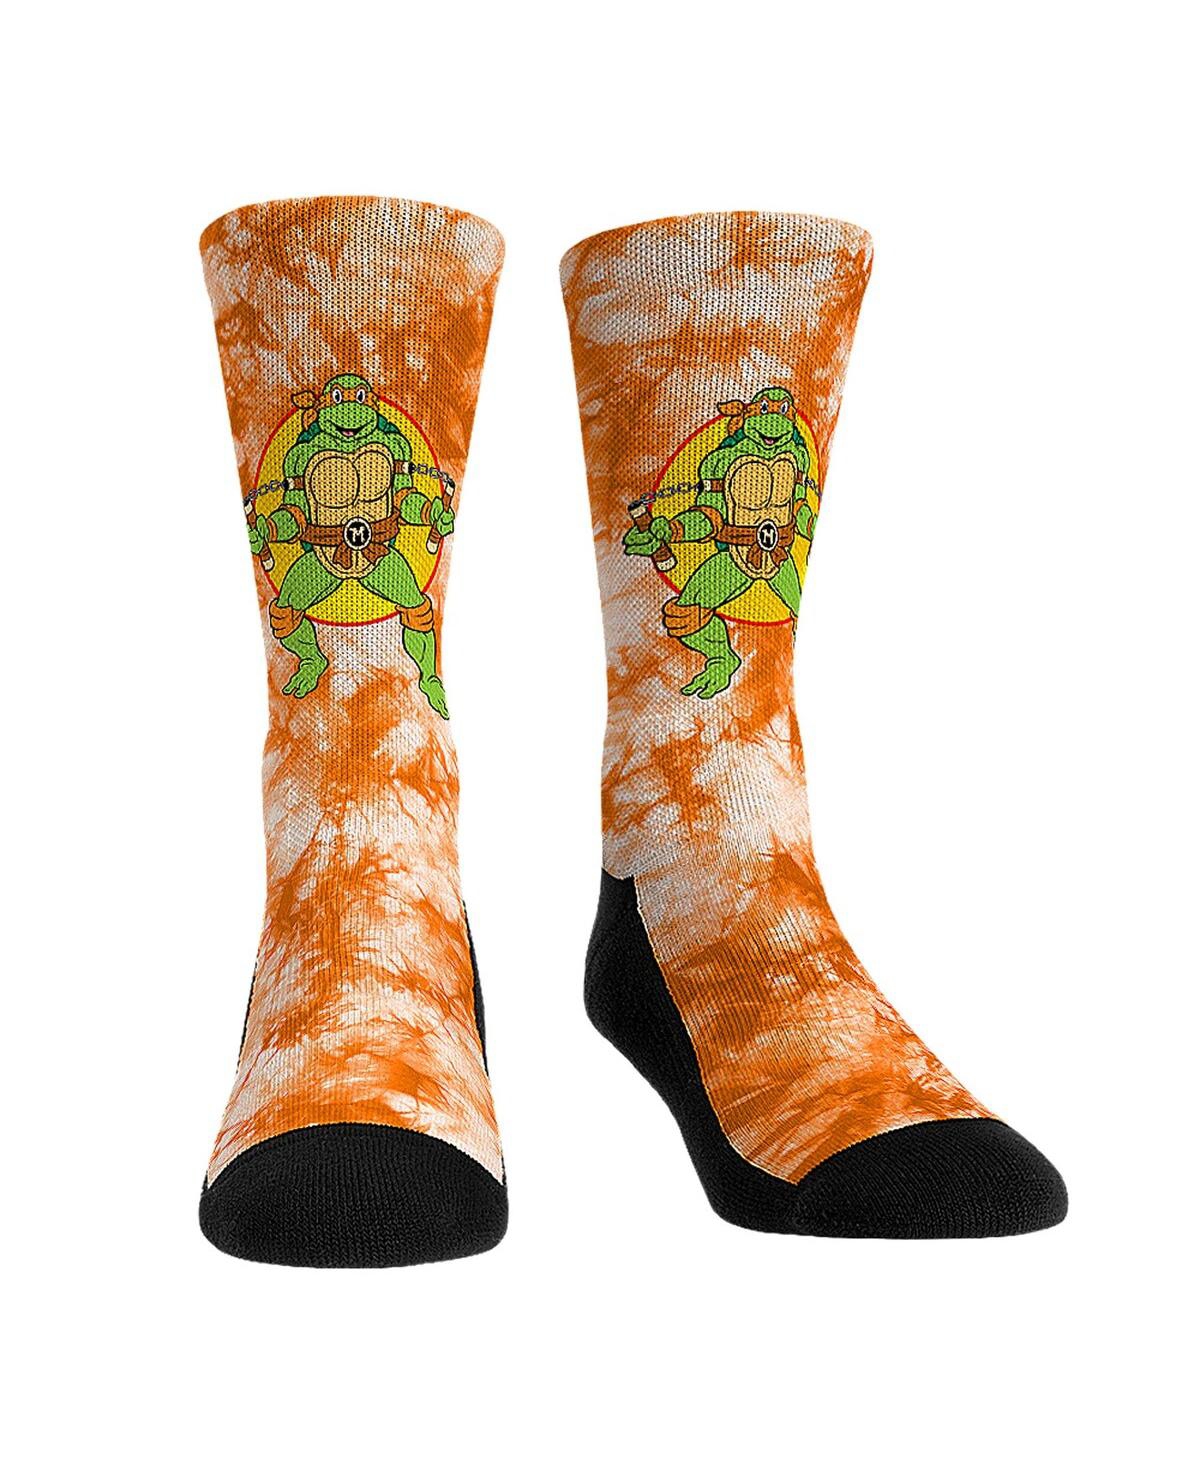 Men's and Women's Socks Teenage Mutant Ninja Turtles Michelangelo Tie-Dye Crew Socks